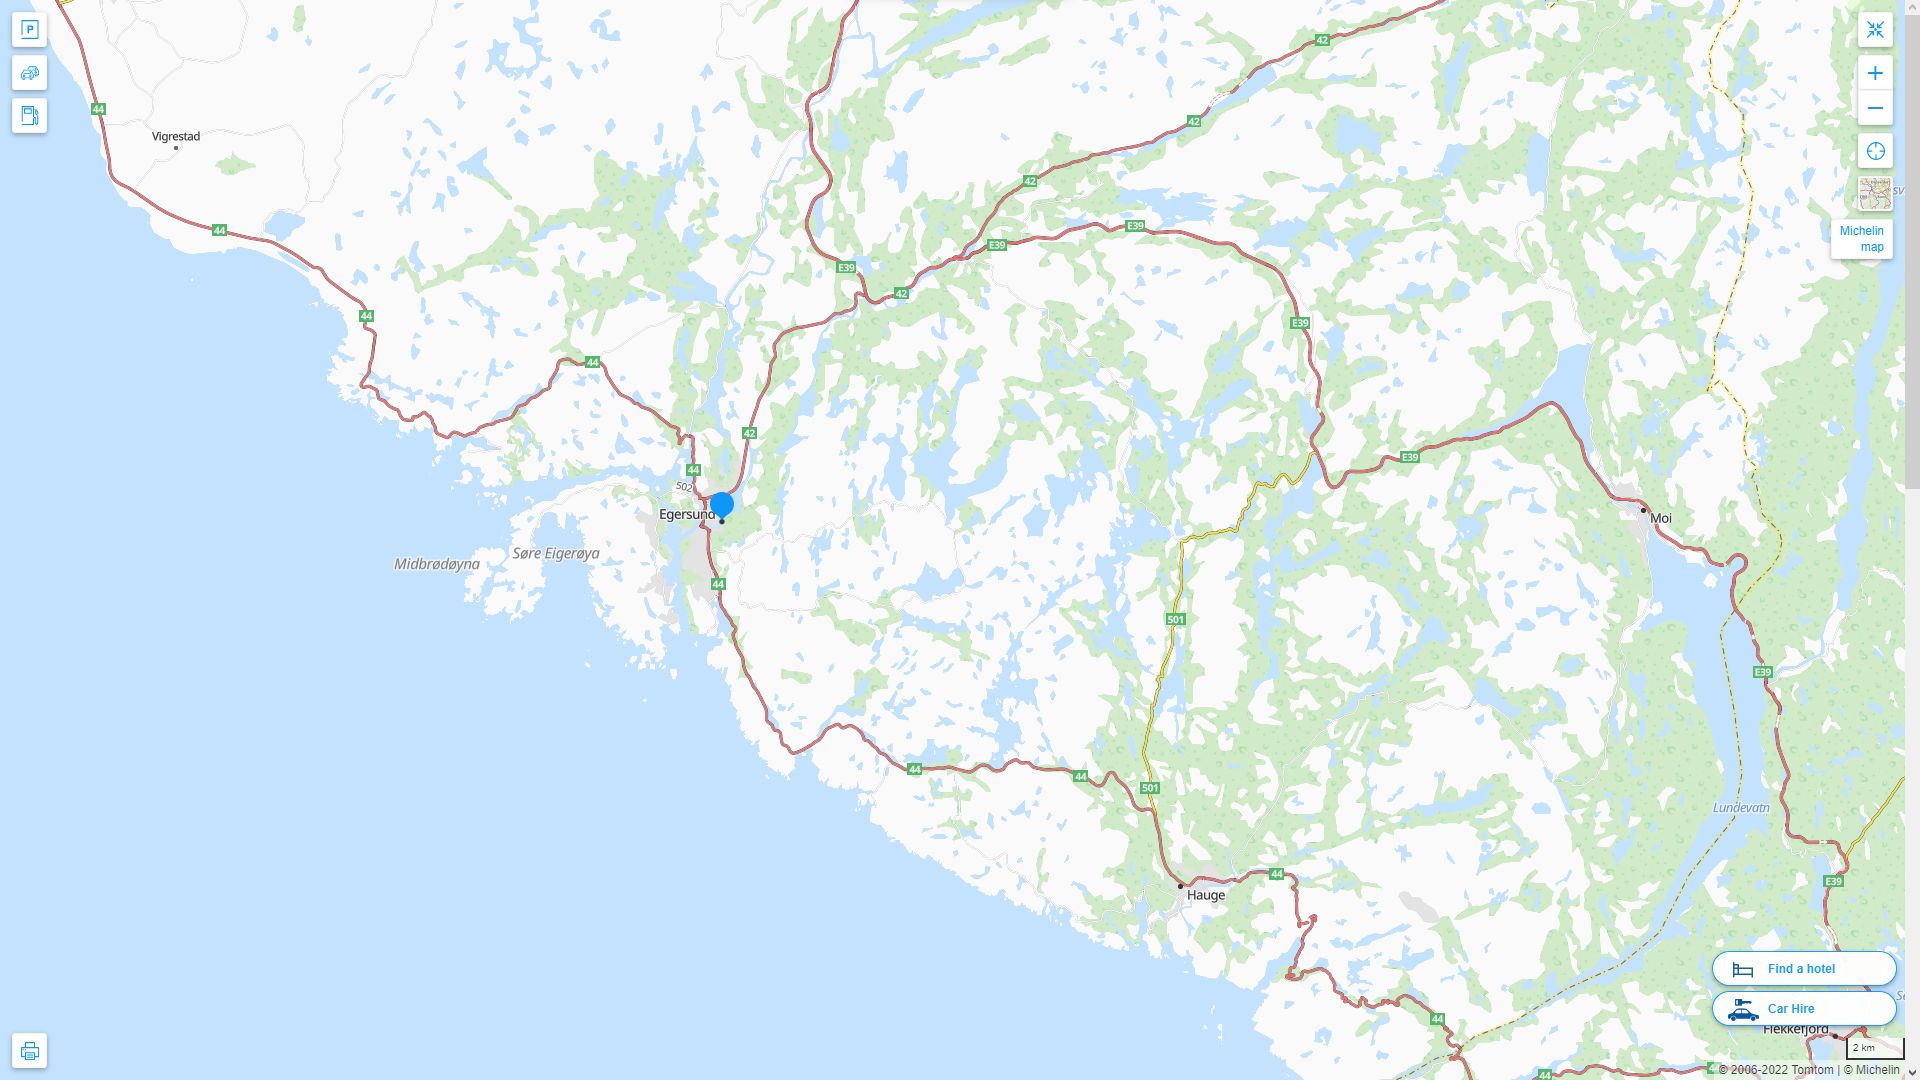 Egersund Norvege Autoroute et carte routiere